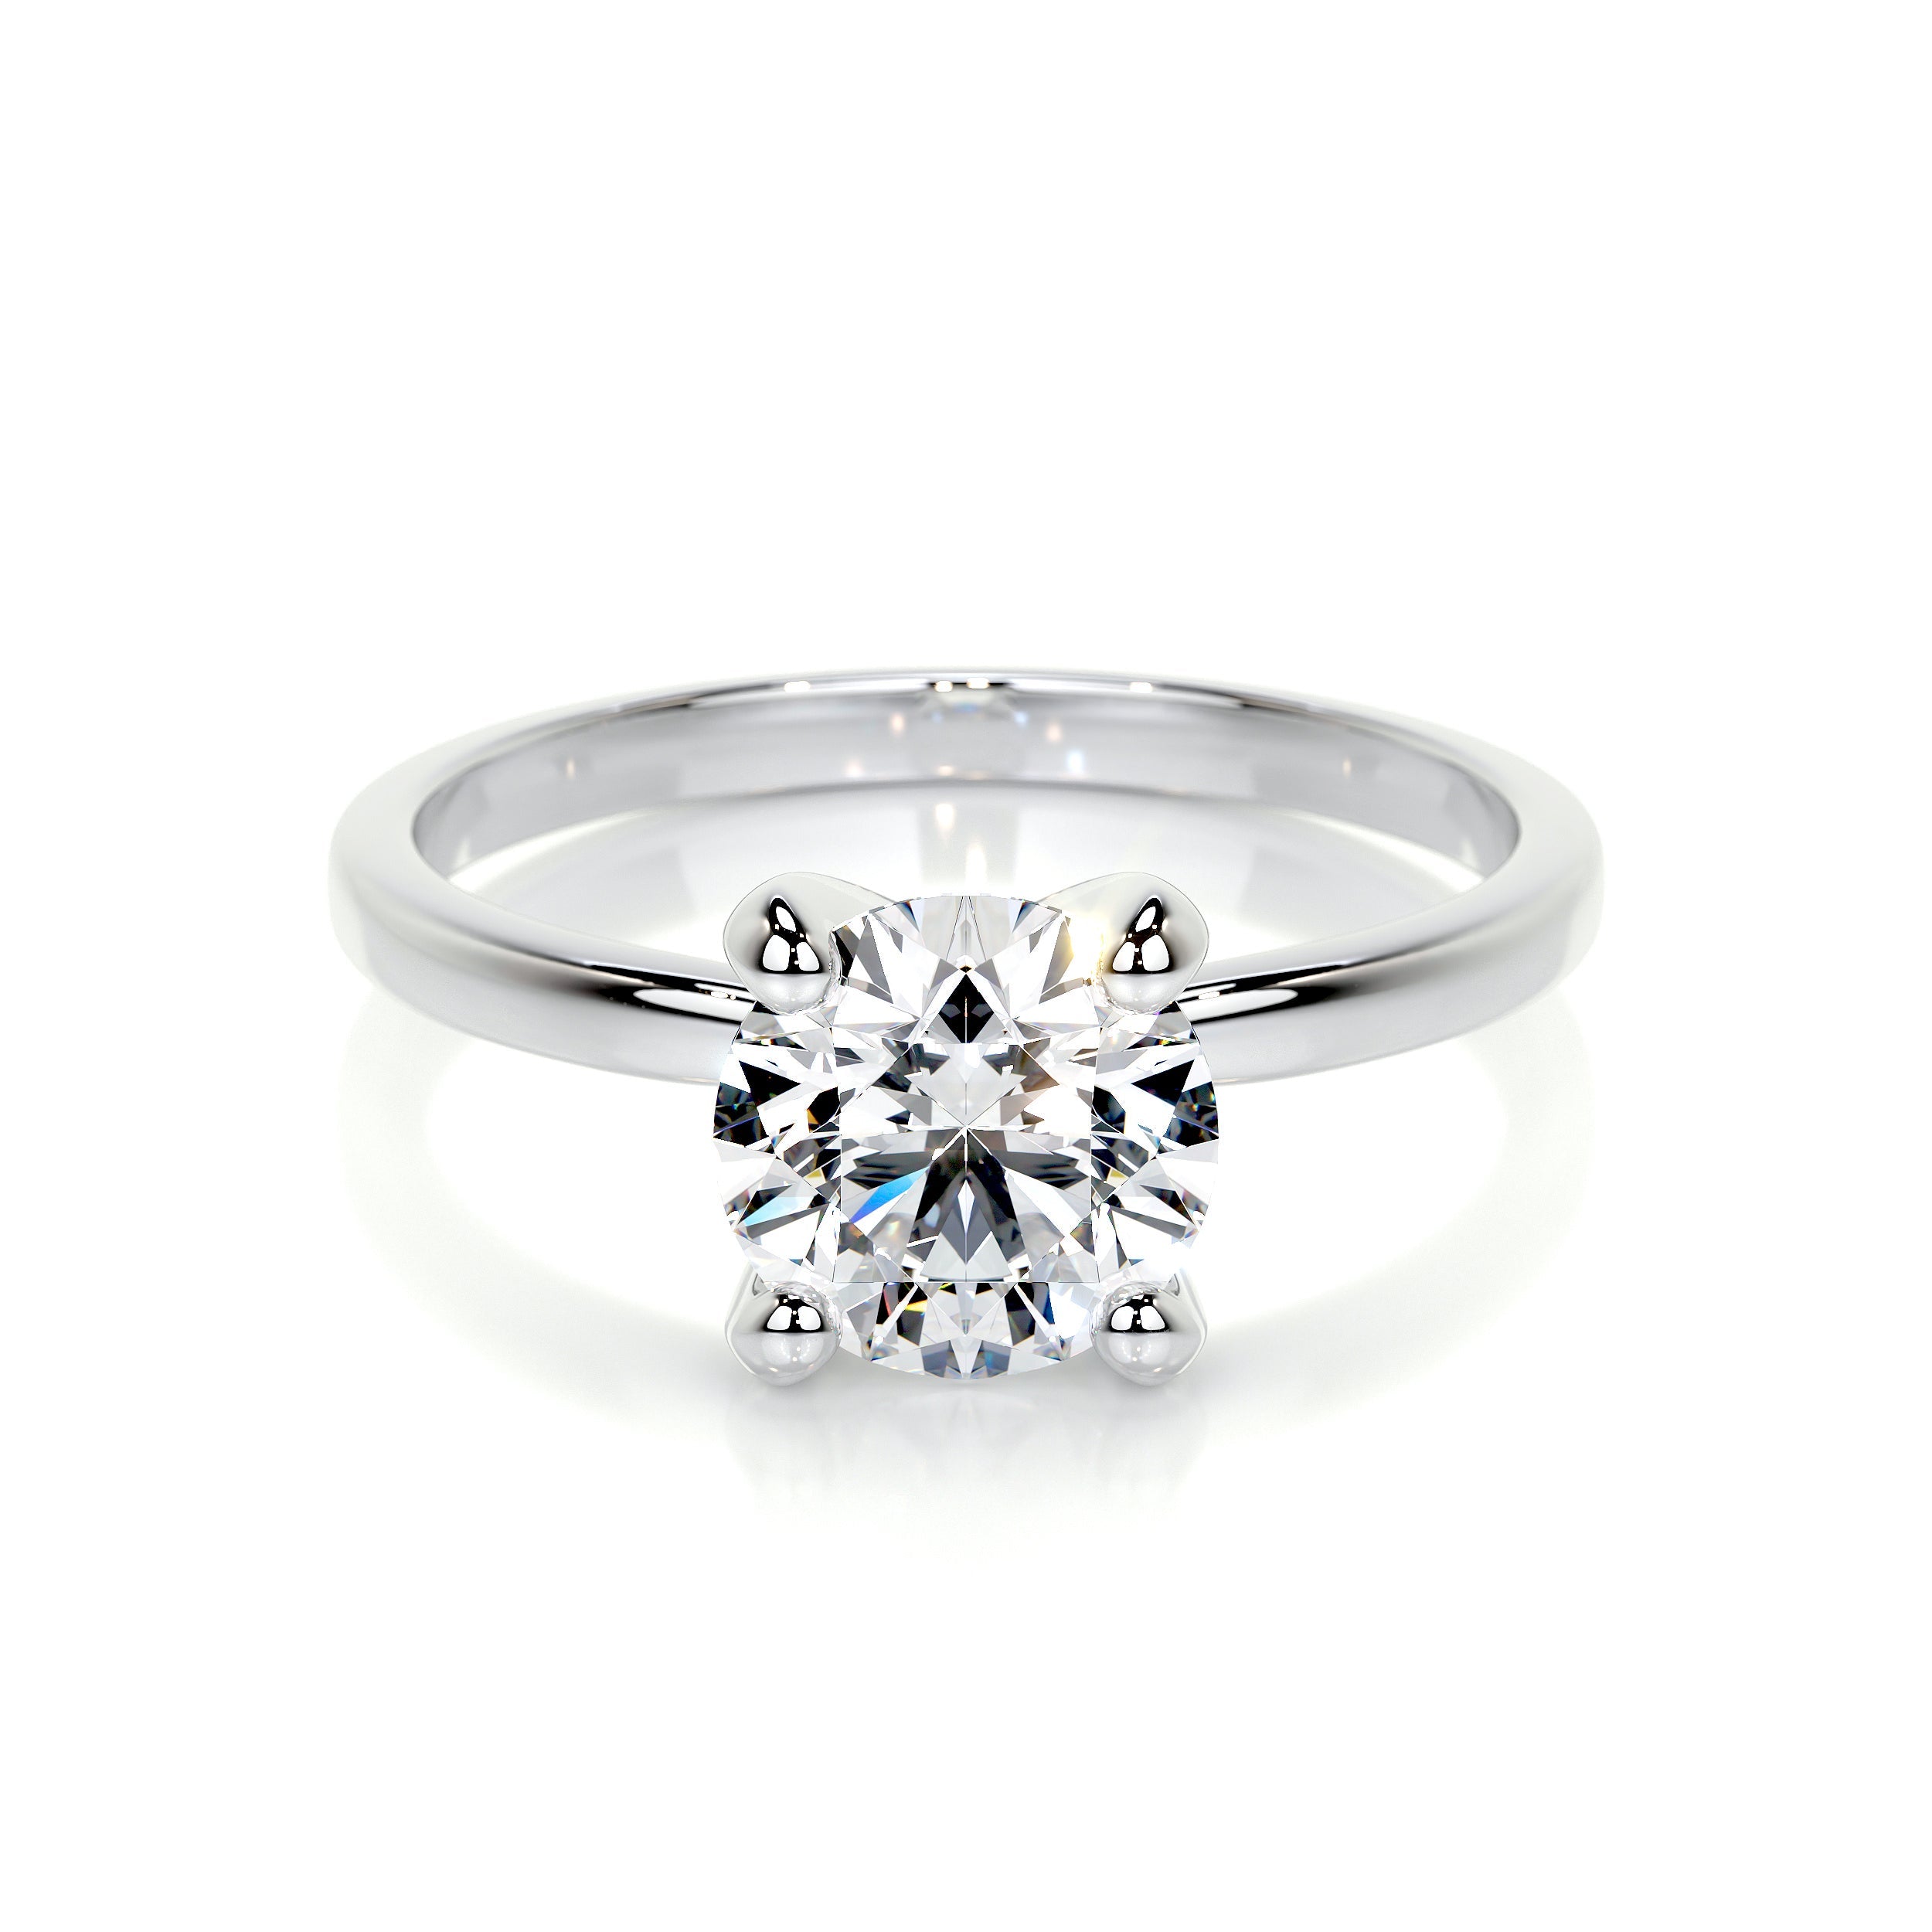 Jessica Lab Grown Diamond Ring   (1.5 Carat) -14K White Gold